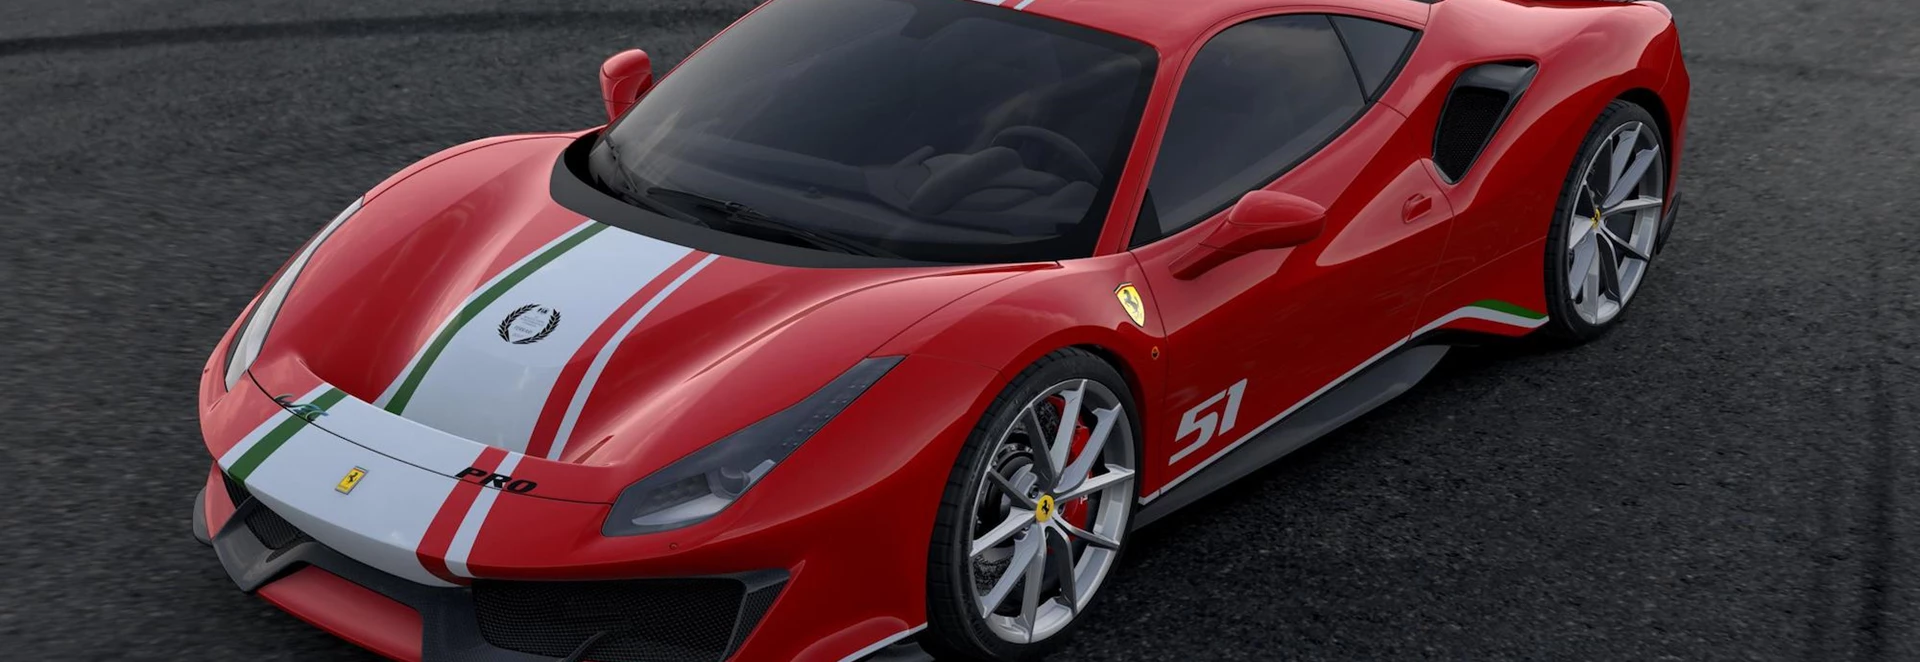 Ferrari 488 Pista ‘Piloti Ferrari’ specification revealed